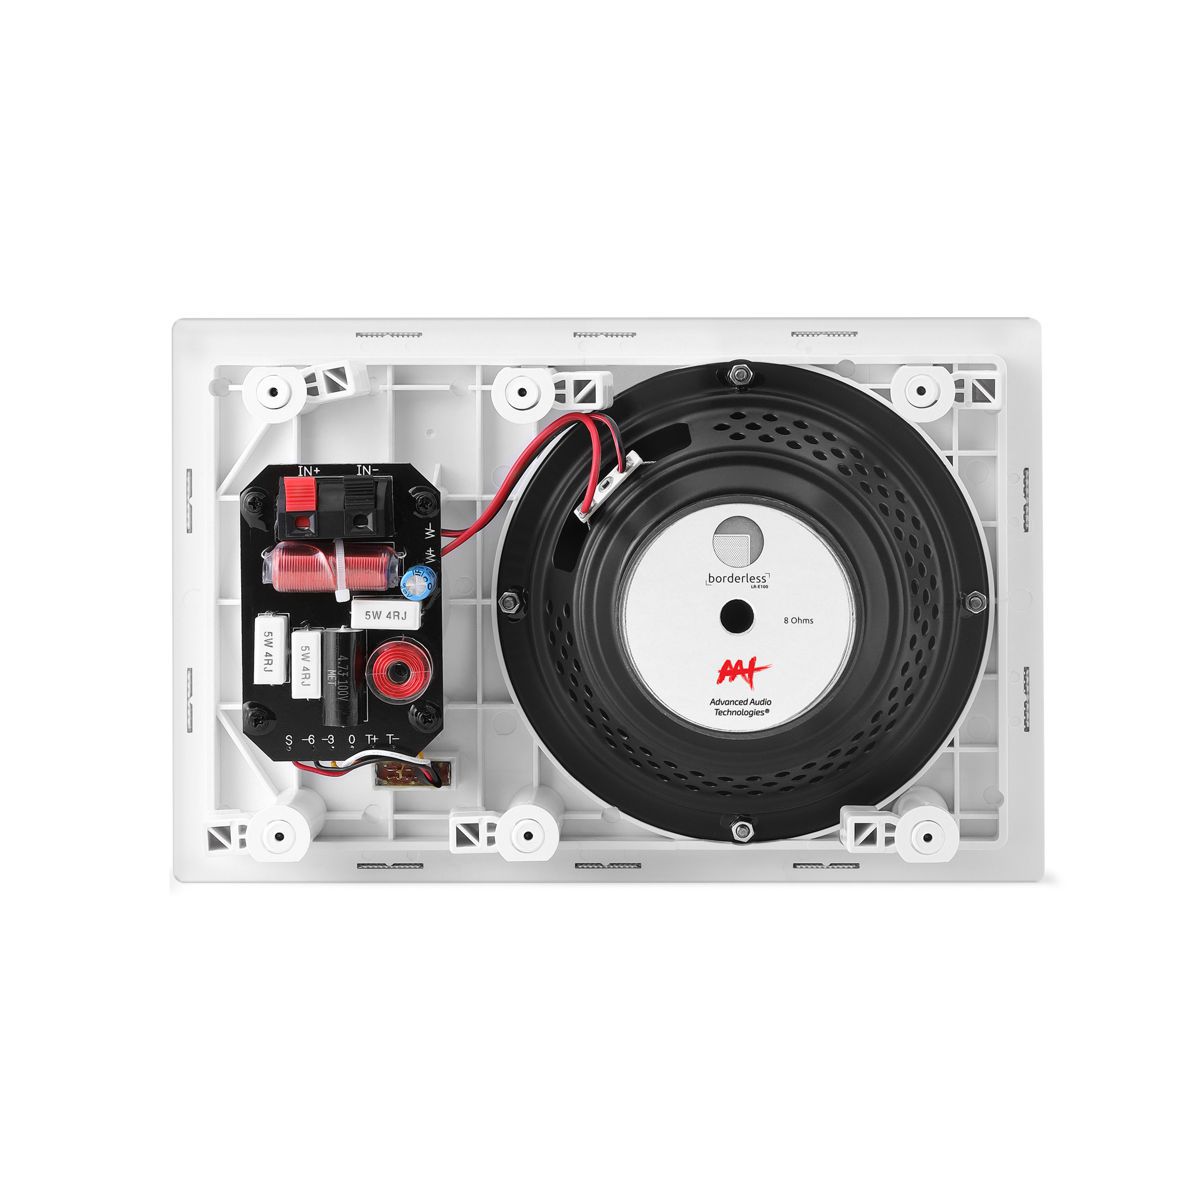 Kit 5.1.2 Dolby Atmos Caixa Acústica de Embutir LCR-A100 + LR-E100 + NQ6-M100 + Subwoofer Compact Cube 8 AAT